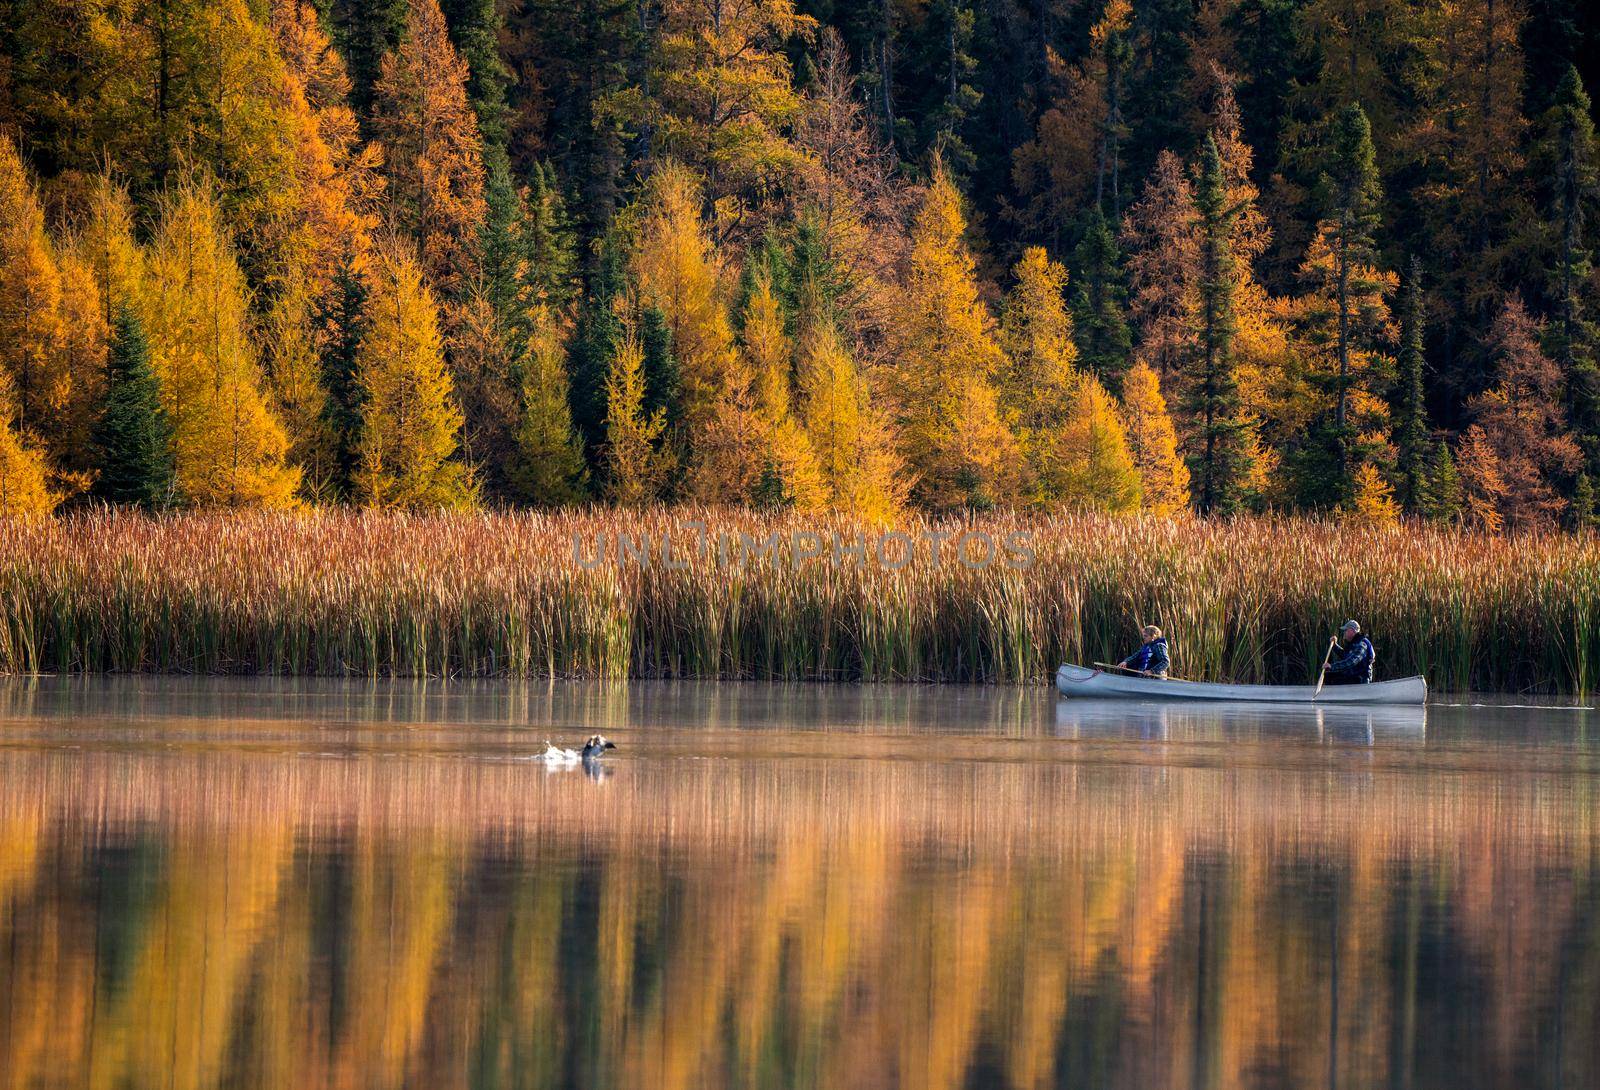 Prairie colors in fall yellow orange trees canoe calm